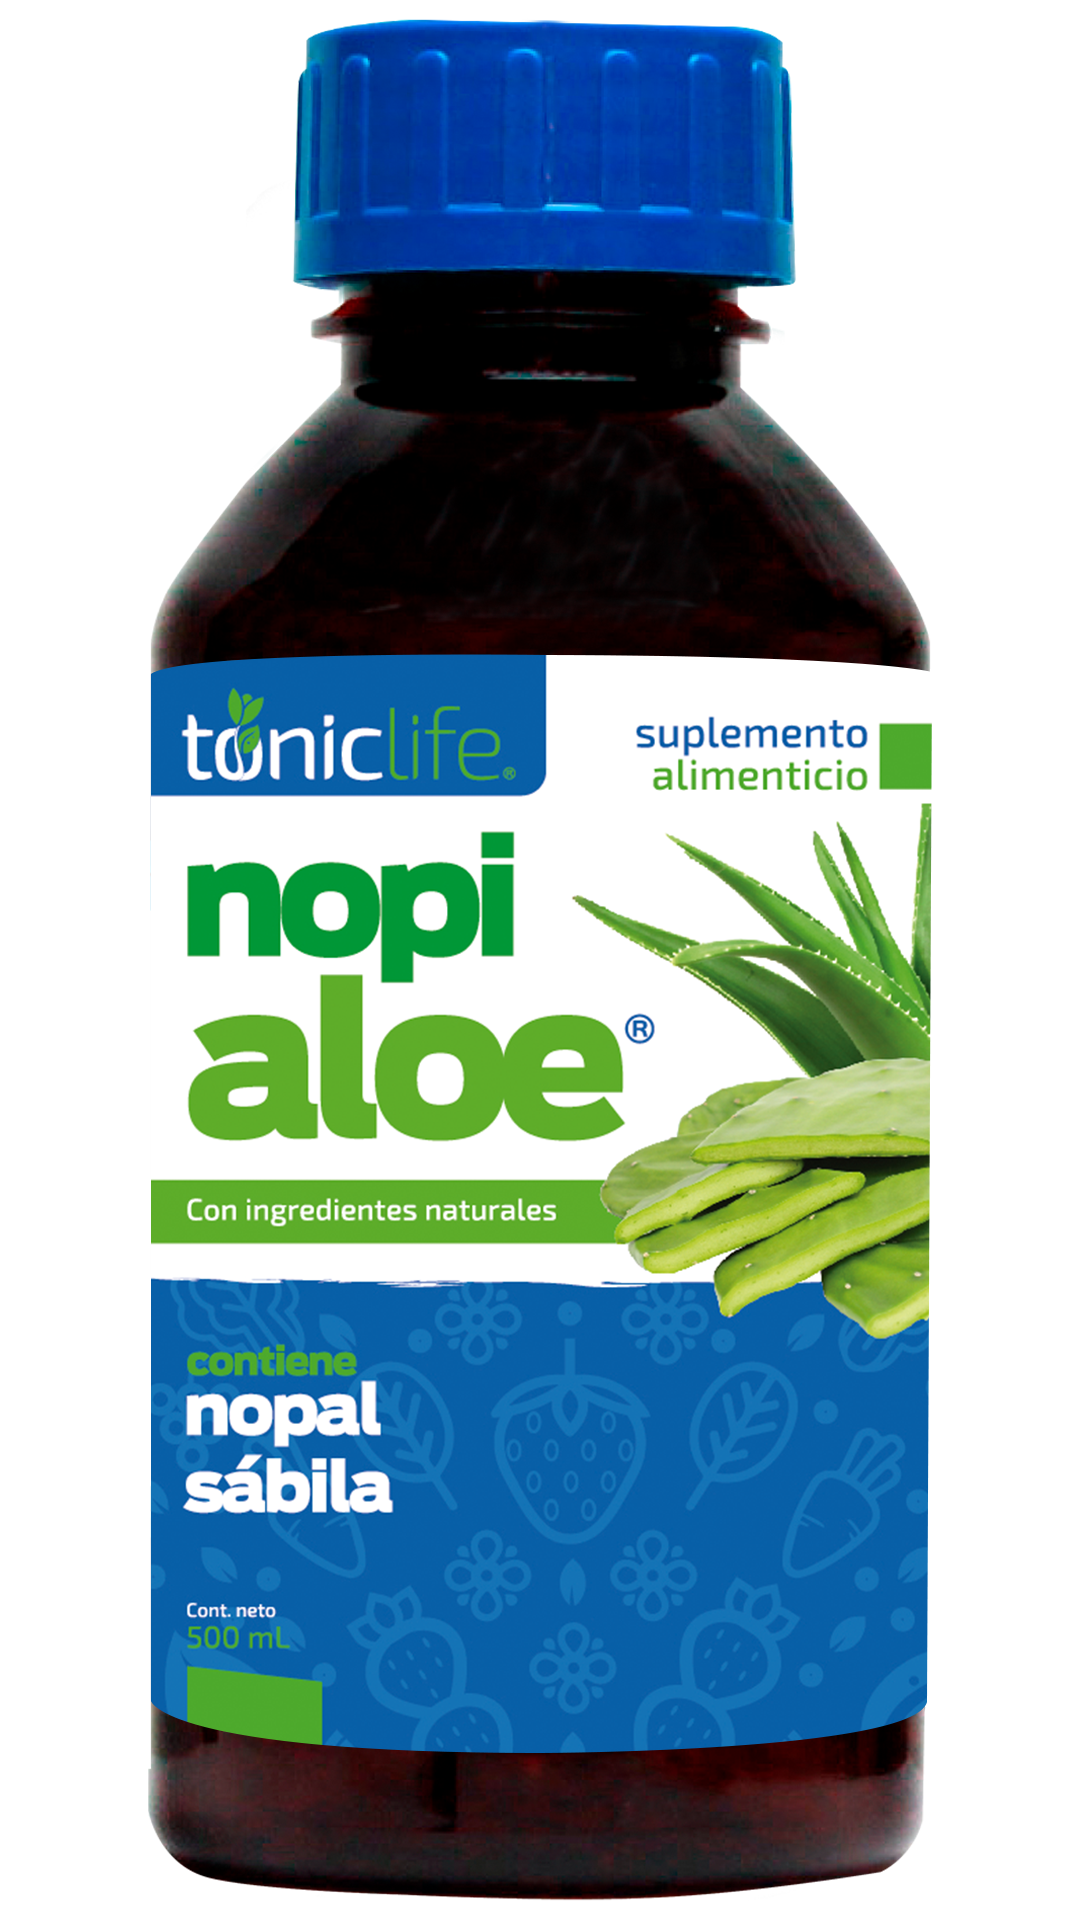 Nopi Aloe de tonic life, su contenido en aloe apoya la gastriris